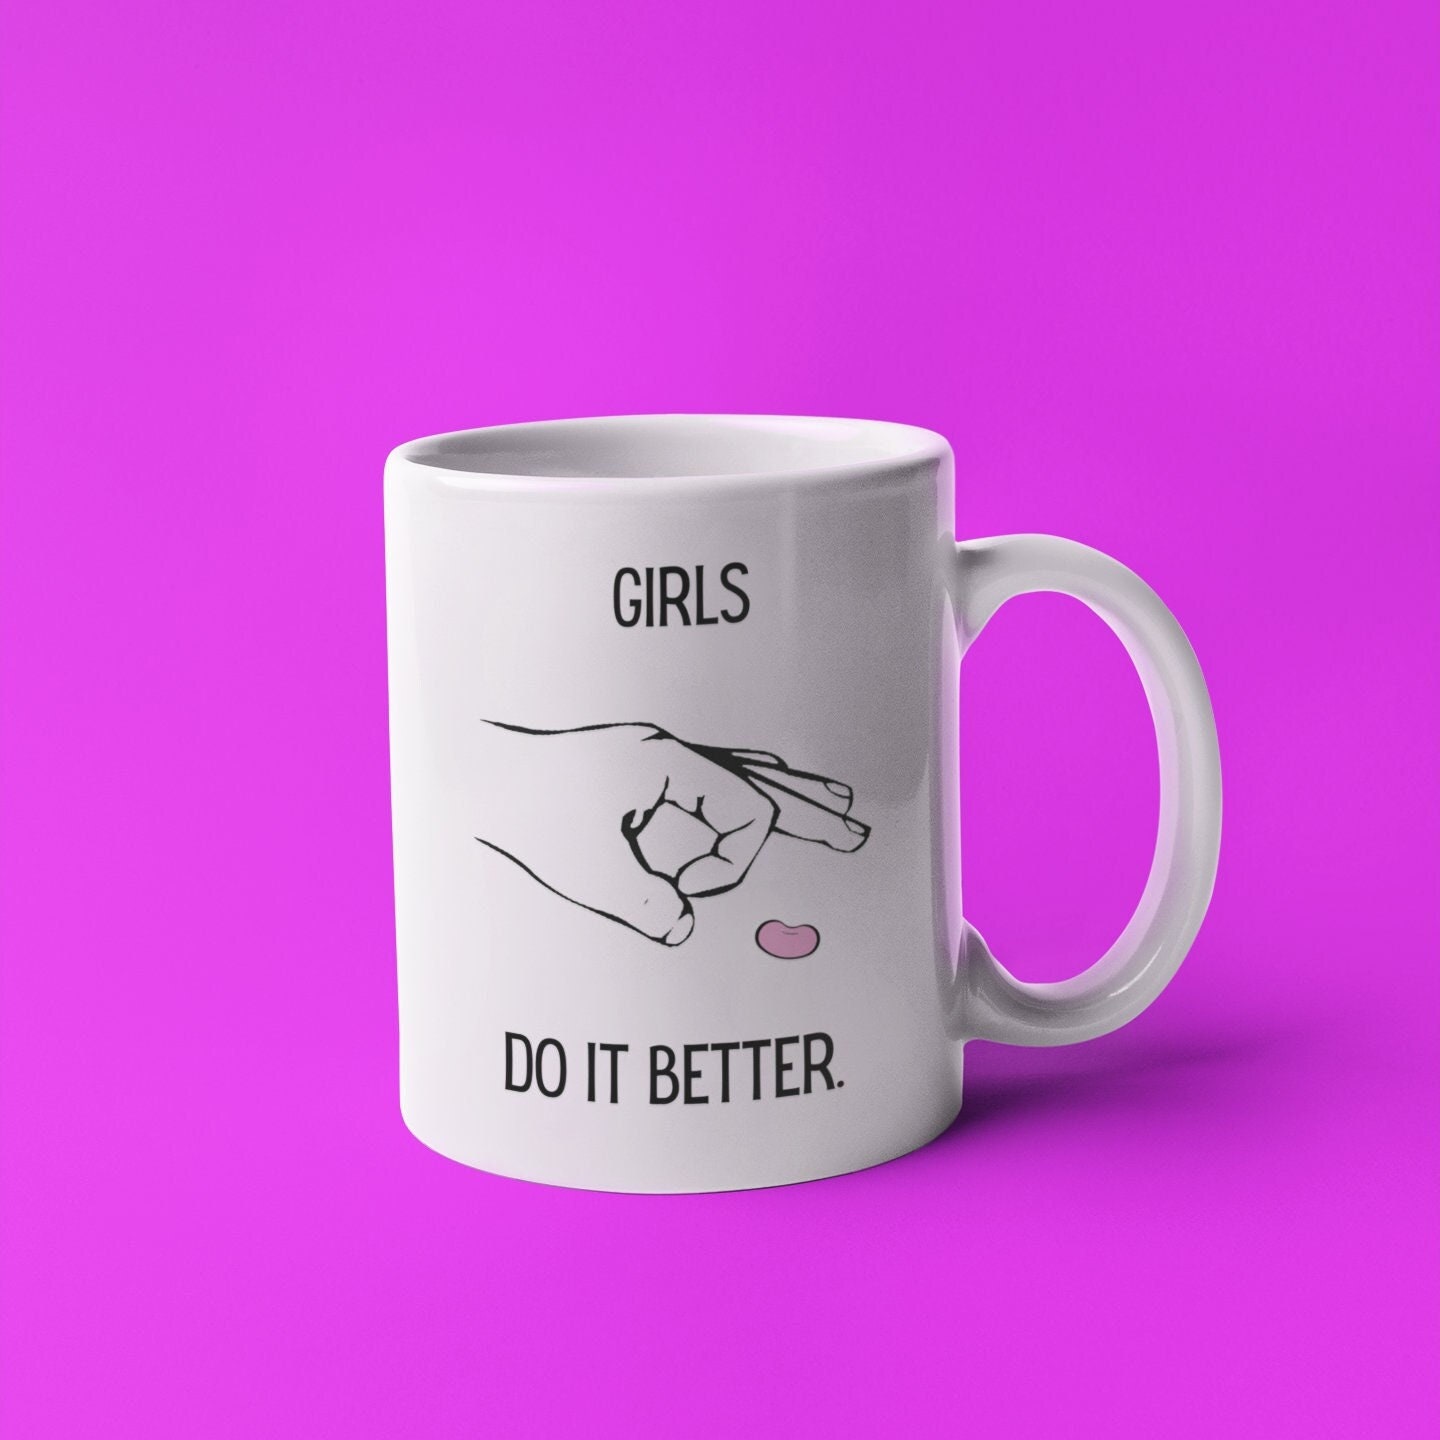 Gift ideas for lesbian friend